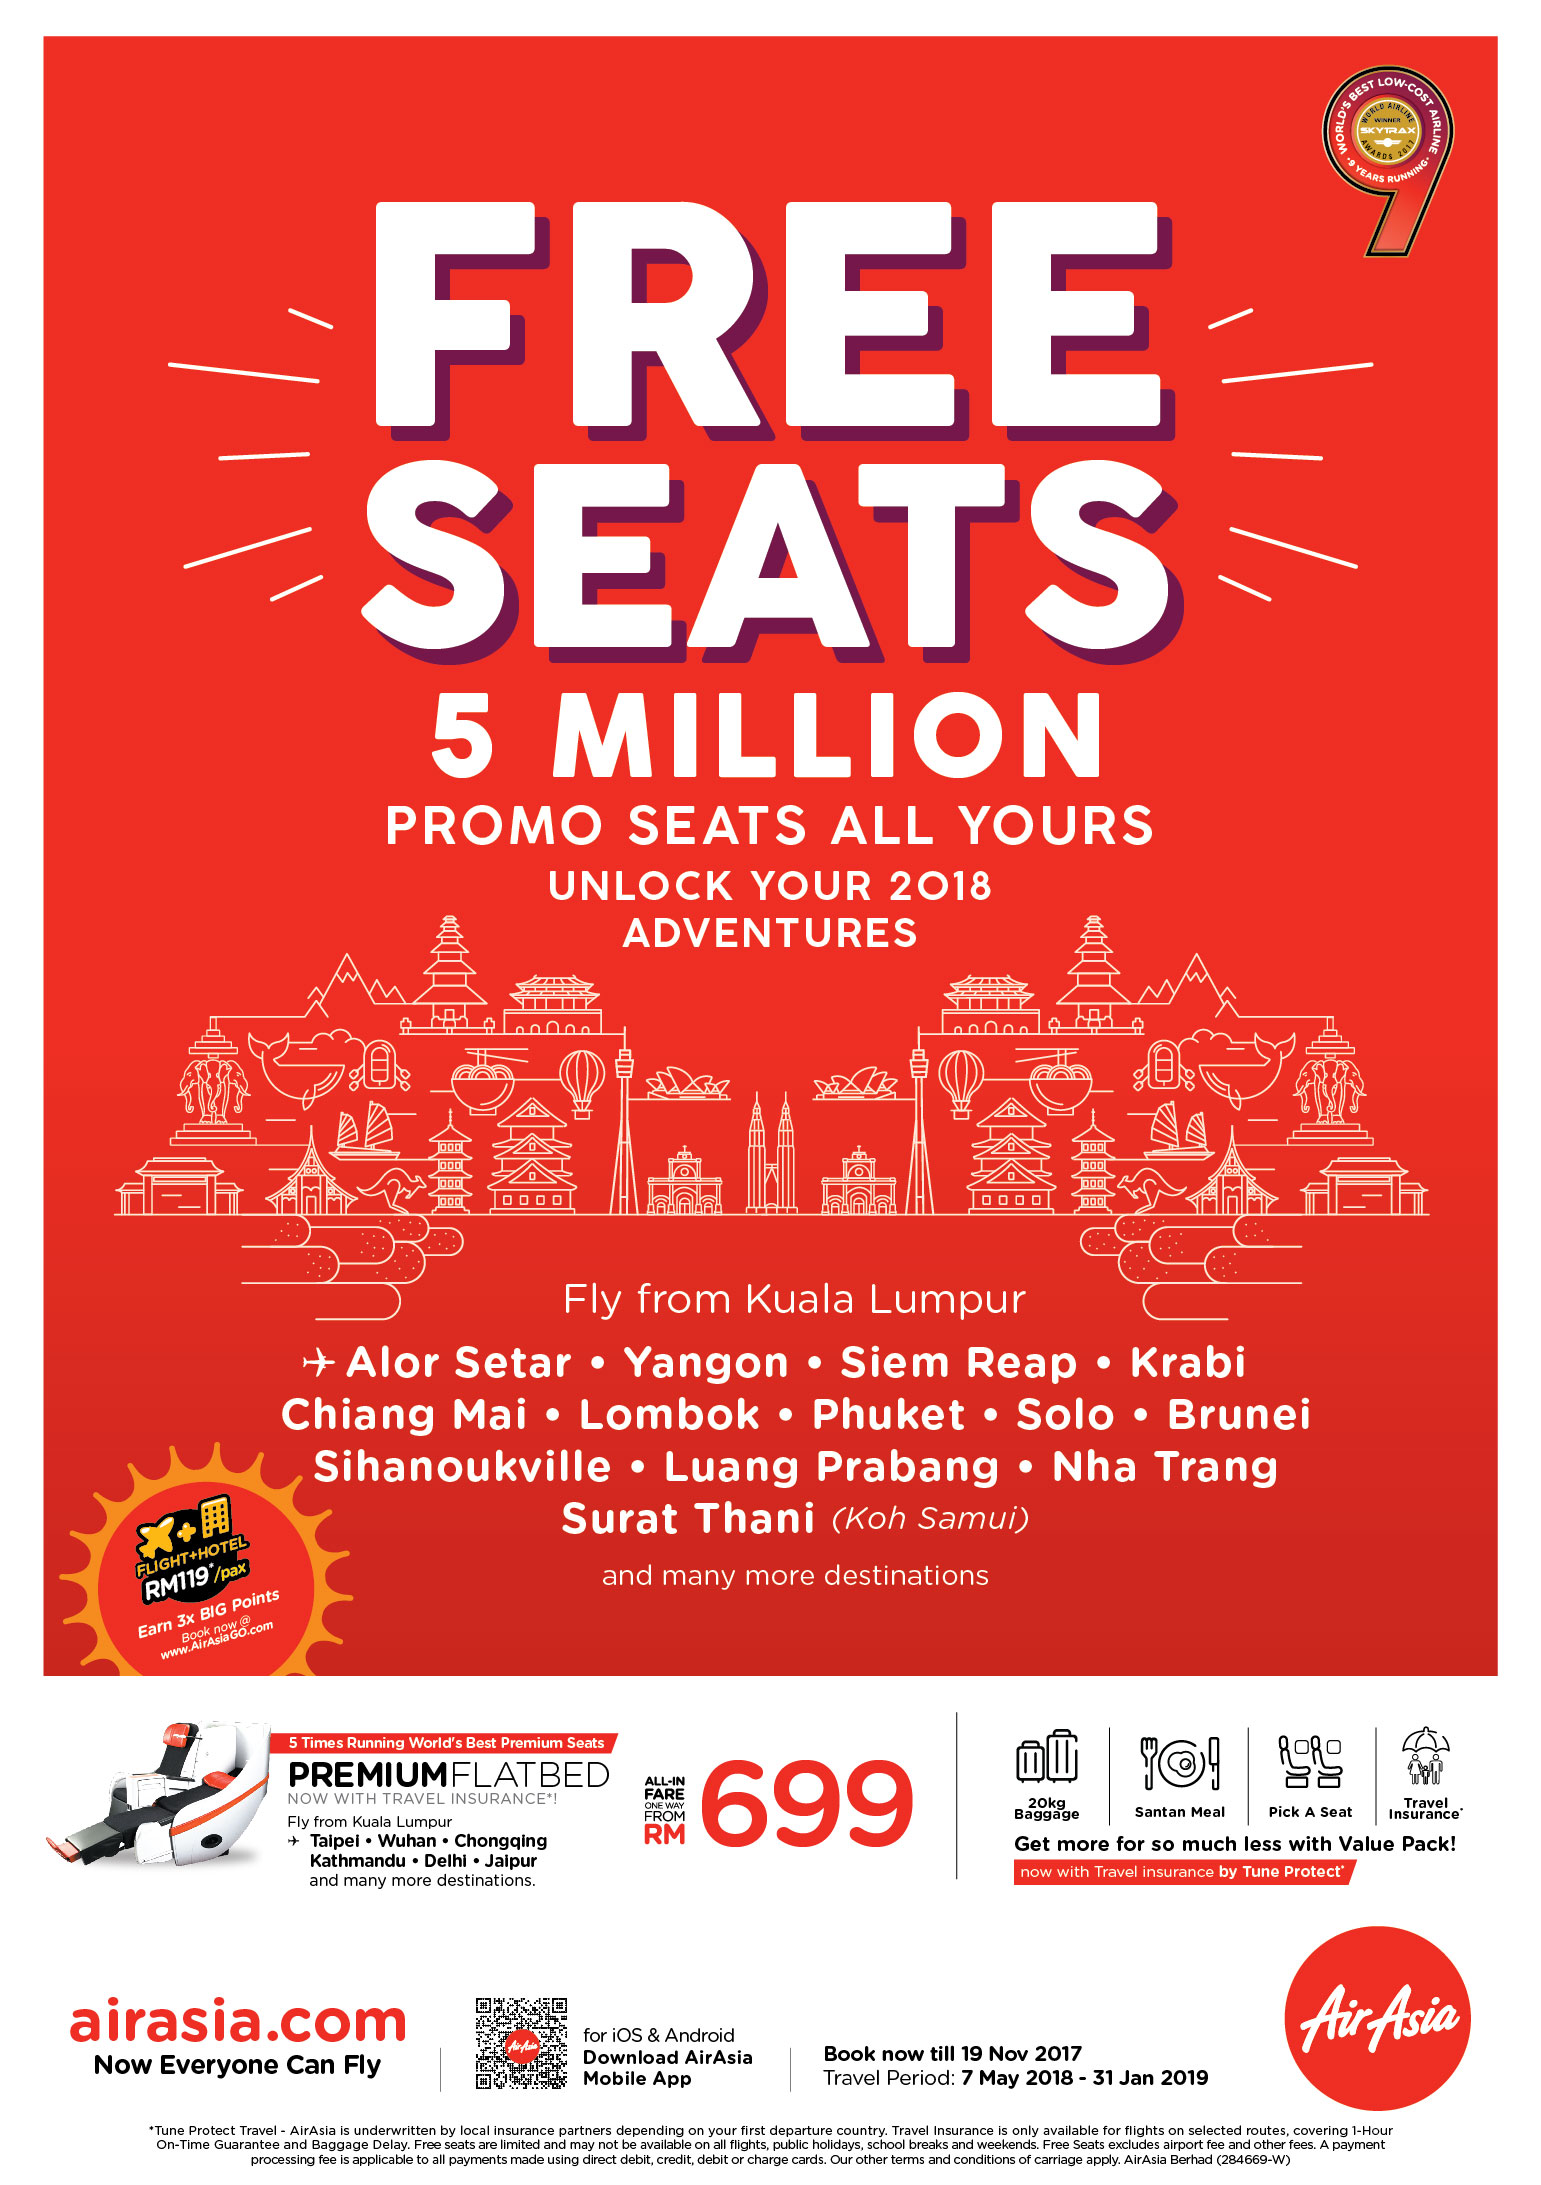 Final Airasia Free Seats Campaign Of The Year Airasia Newsroom